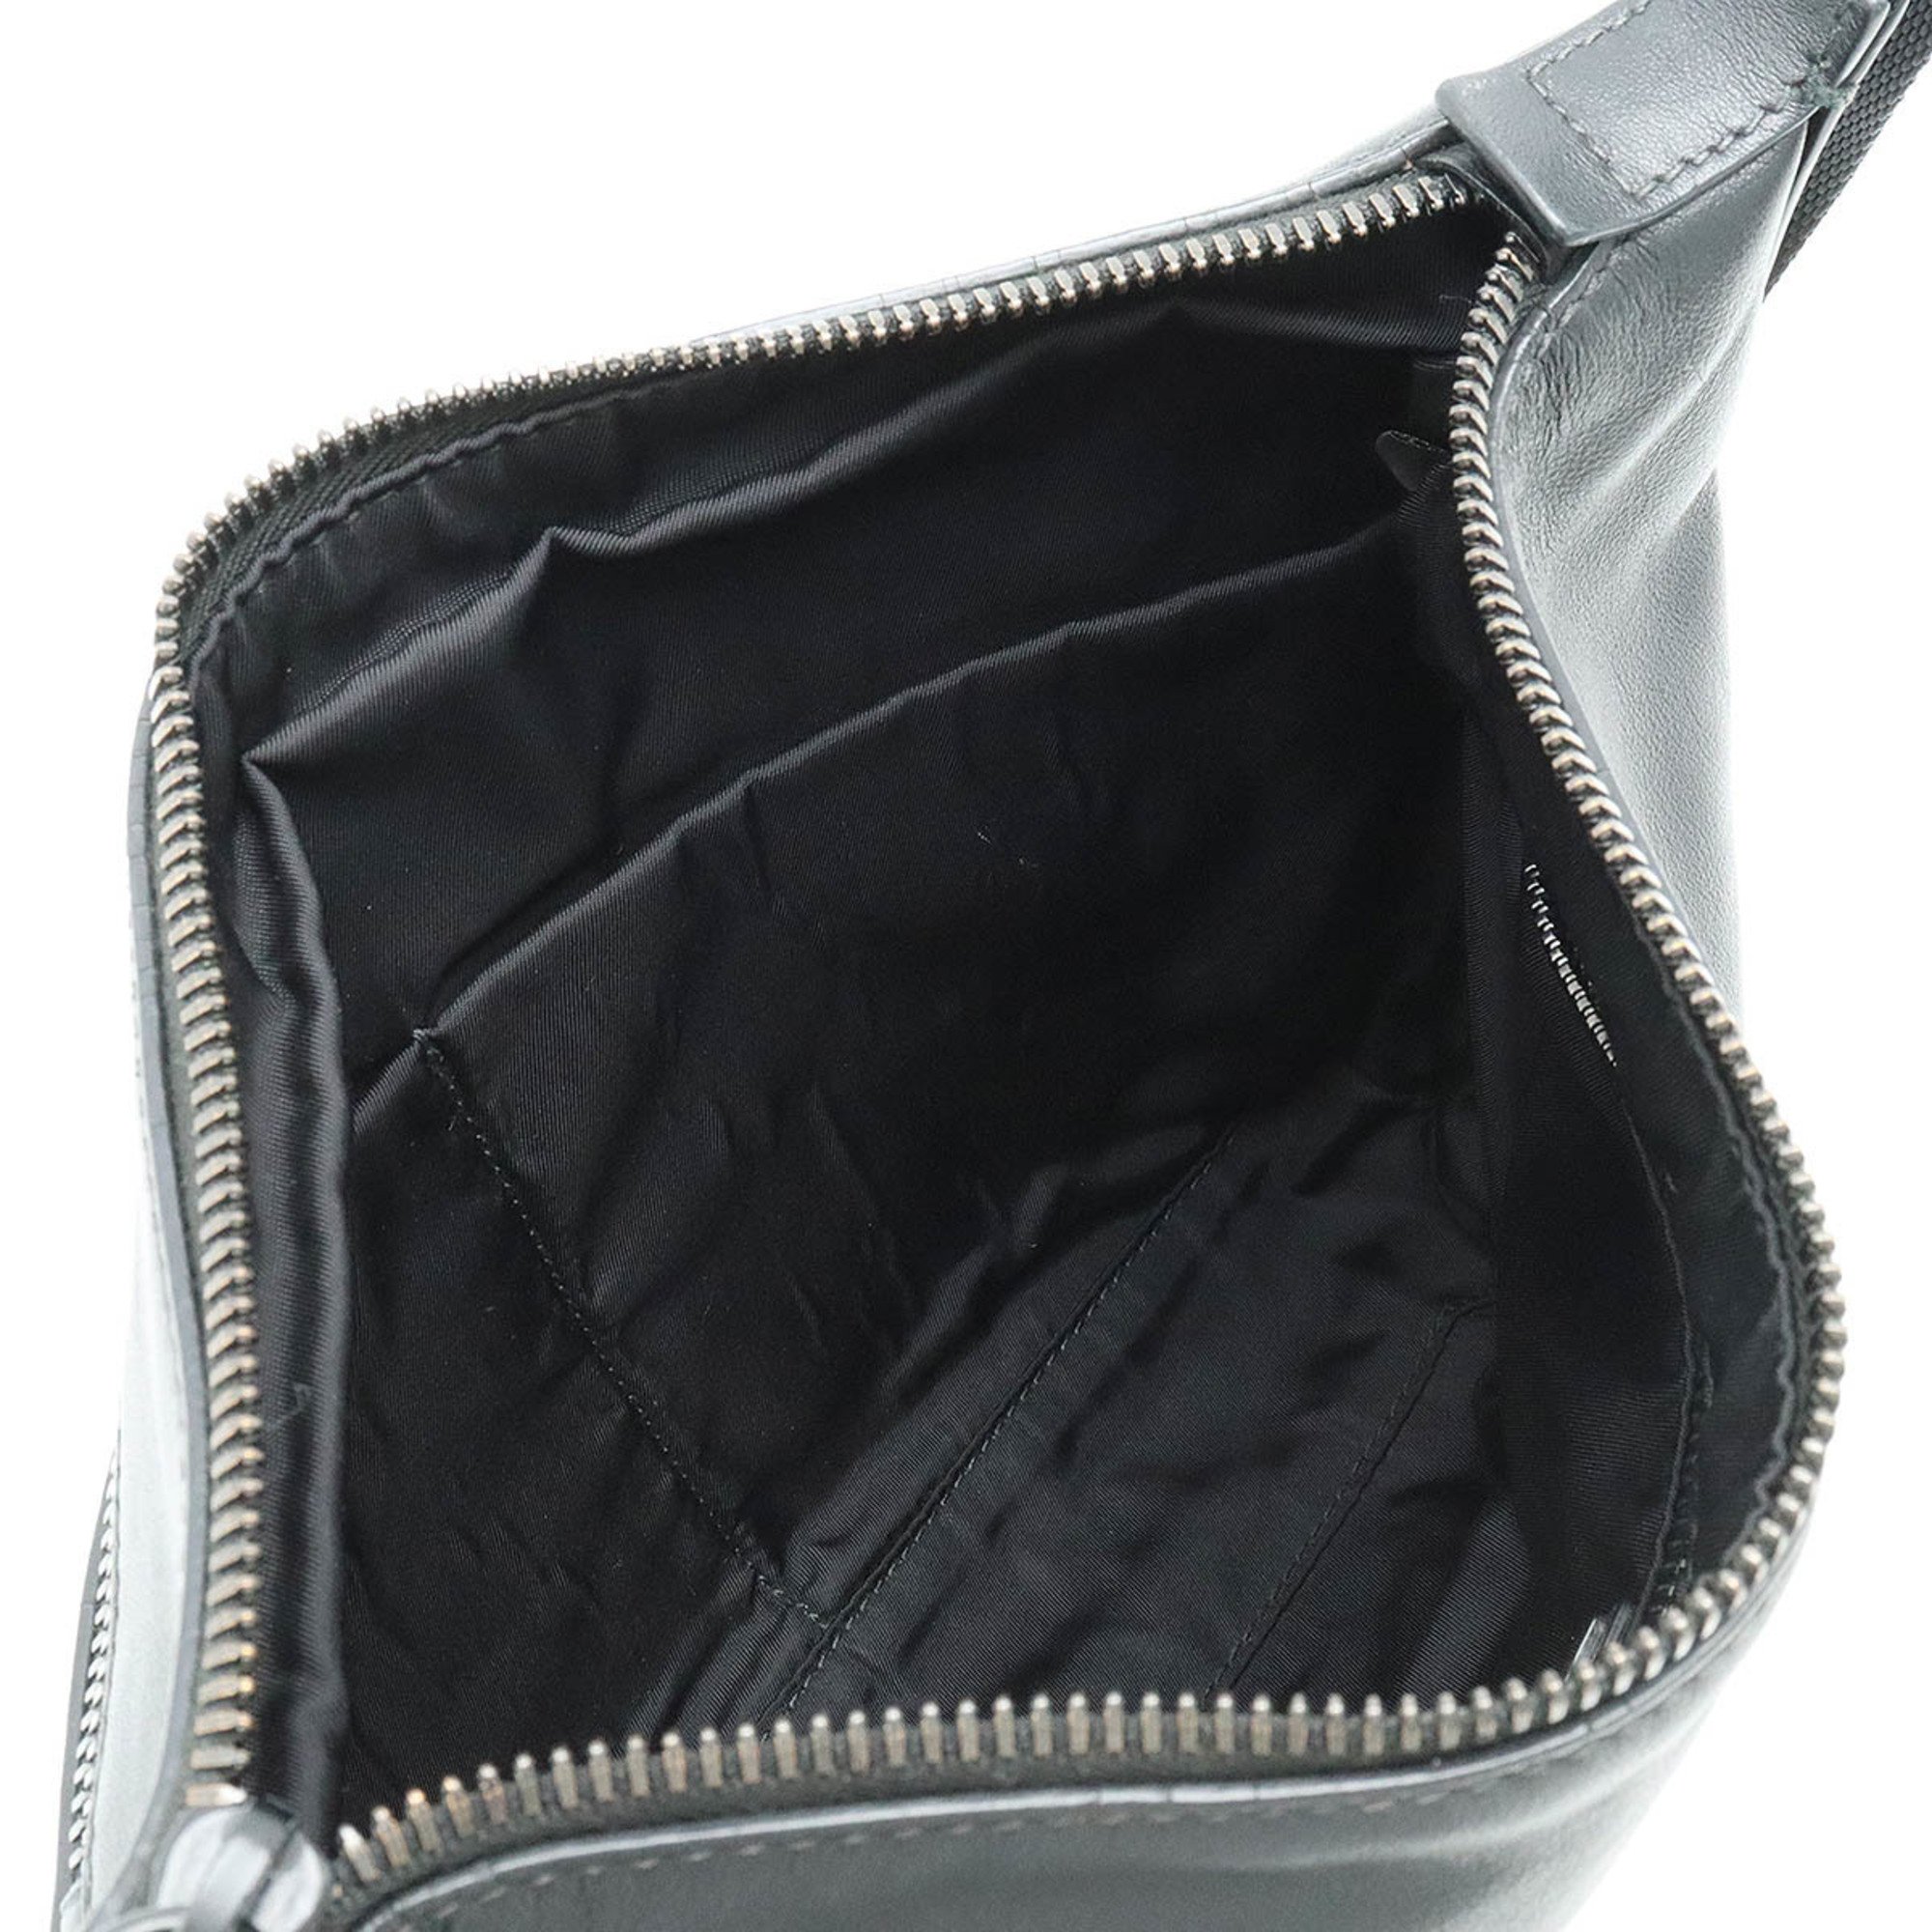 PRADA Prada shoulder bag leather NERO black 2VH078